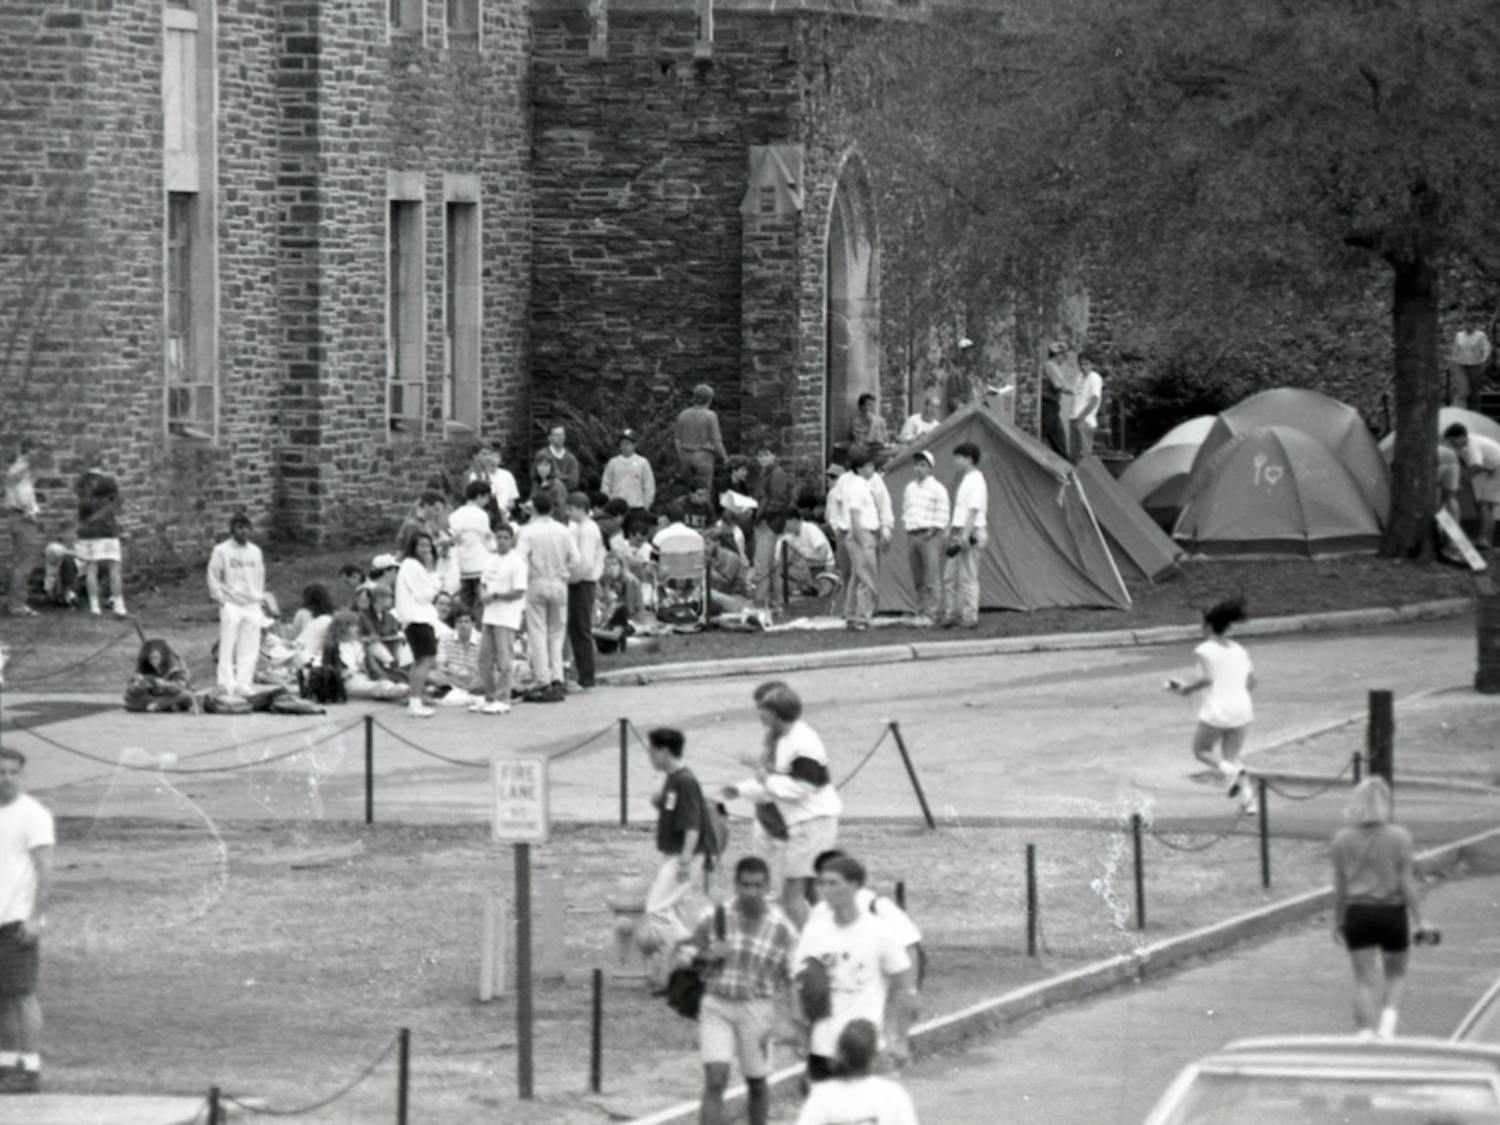 Students tenting in K-Ville in 1991.